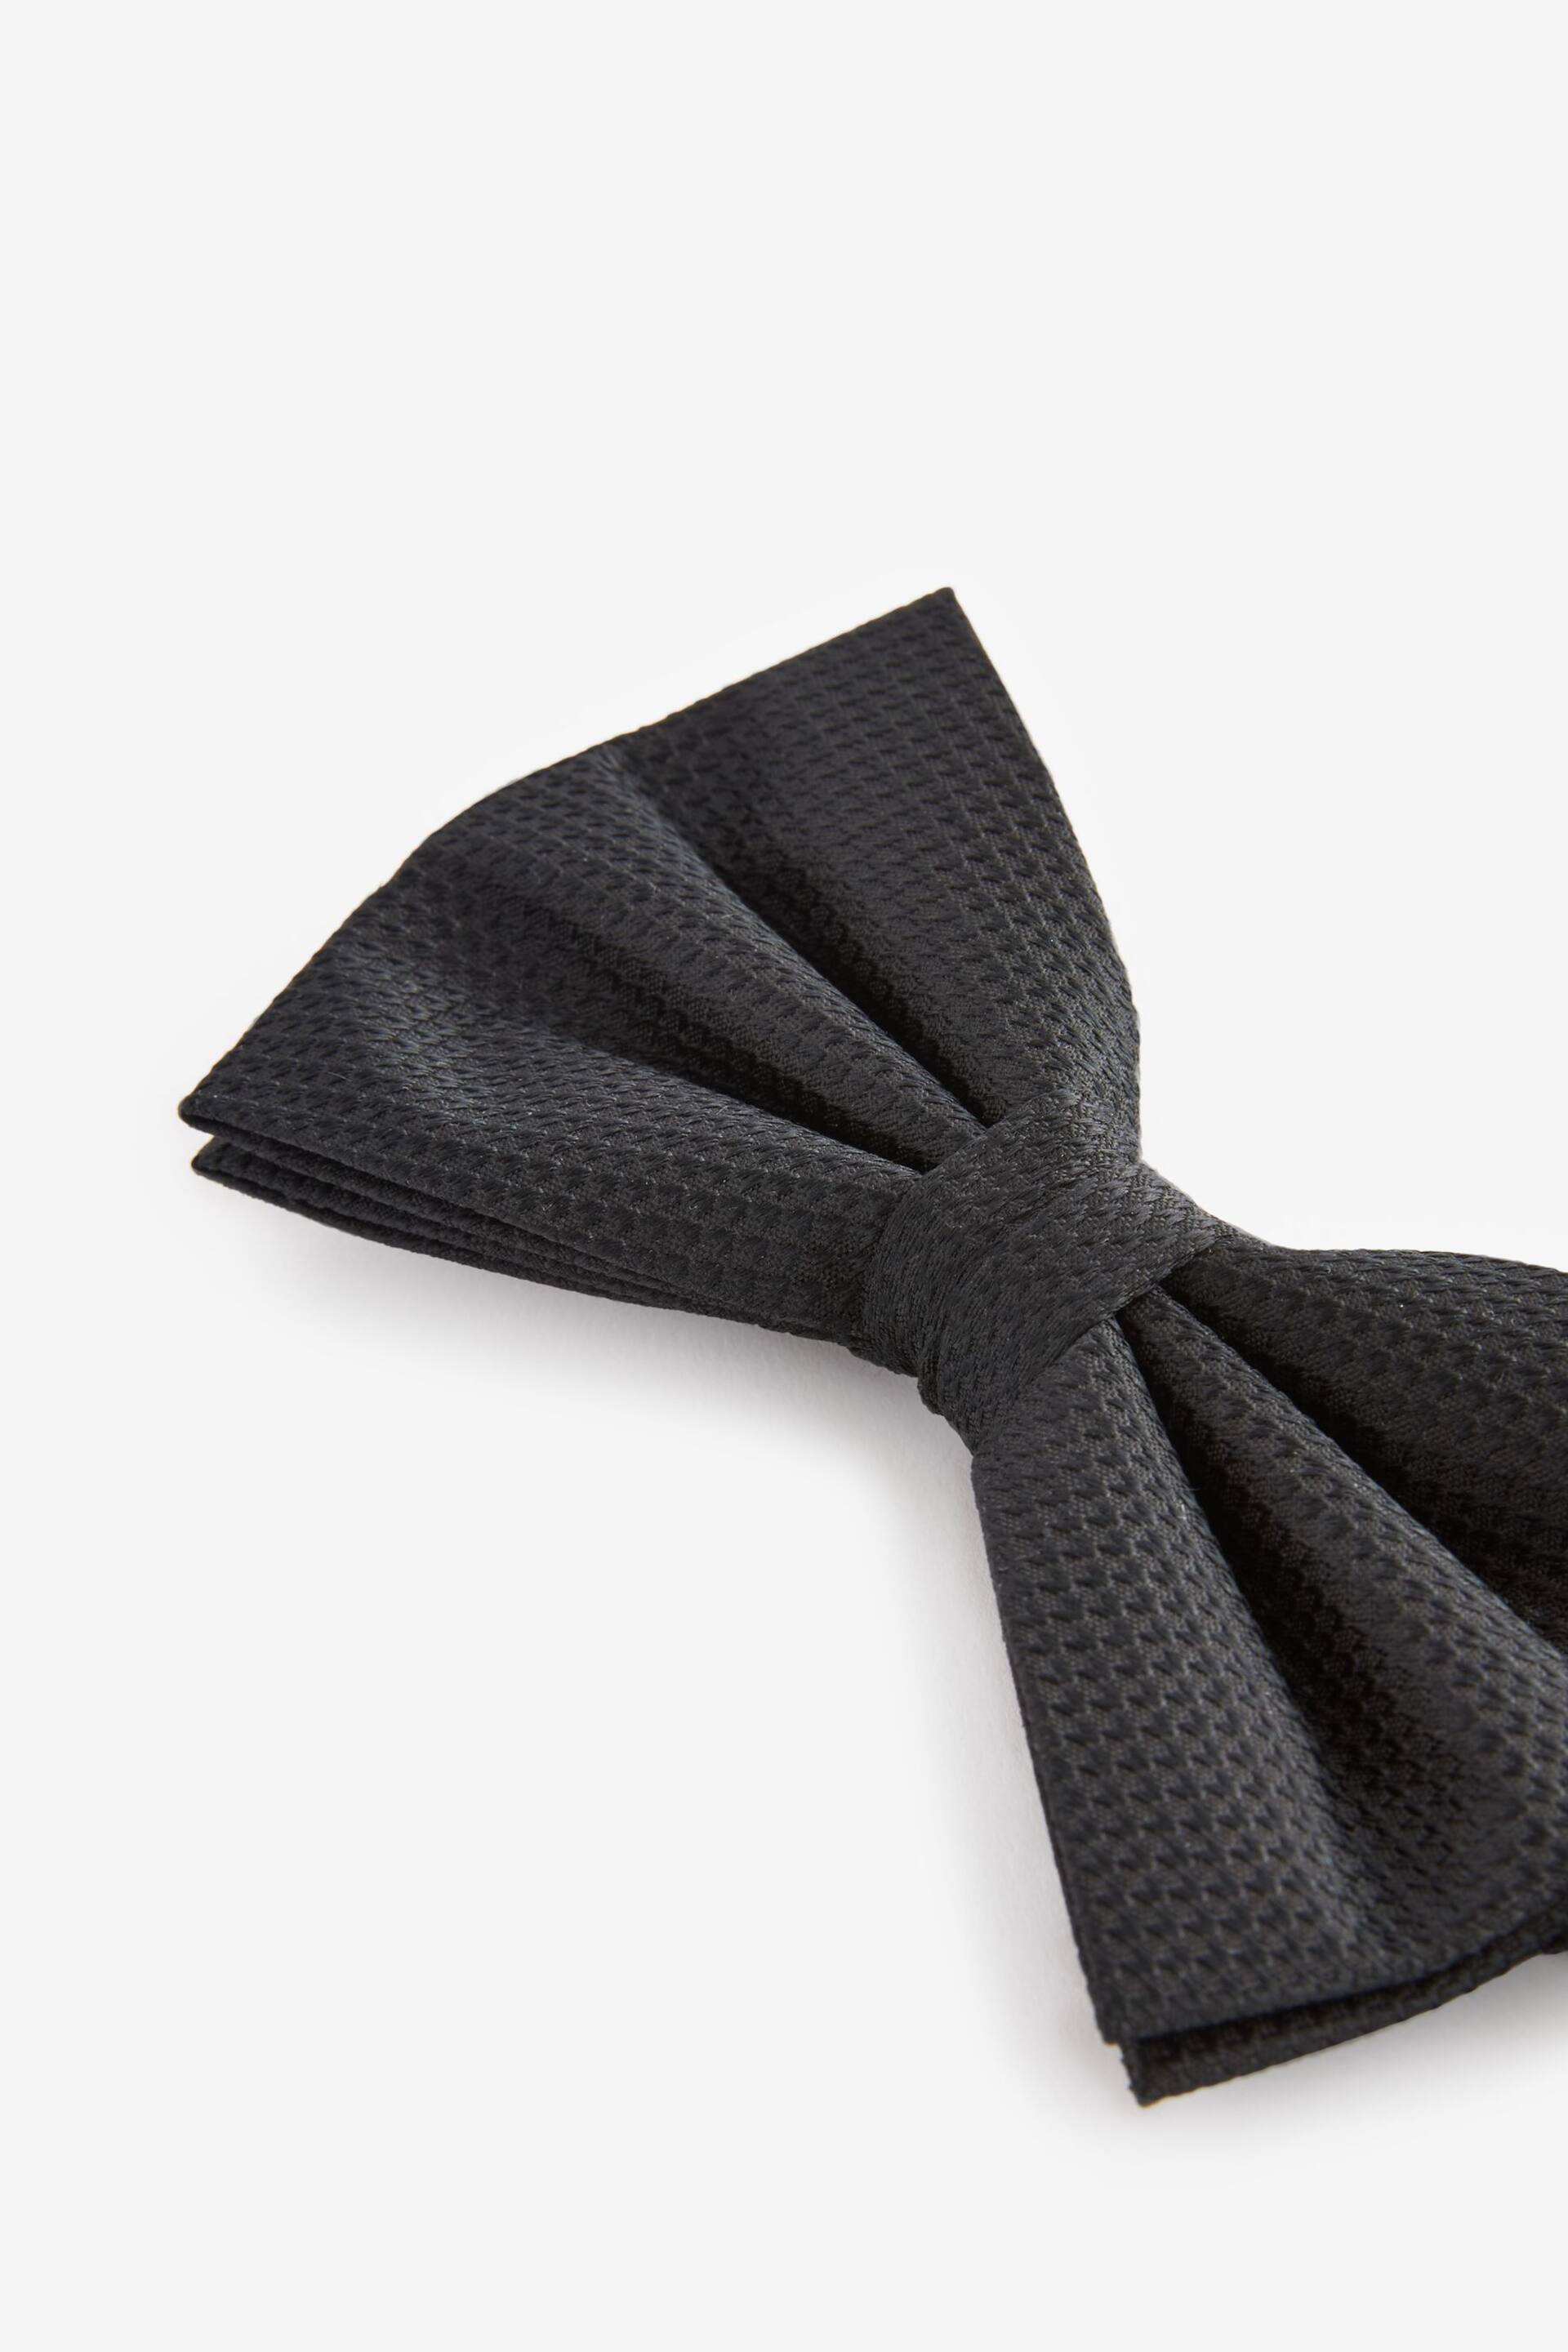 Black Textured Silk Bow Tie - Image 2 of 4